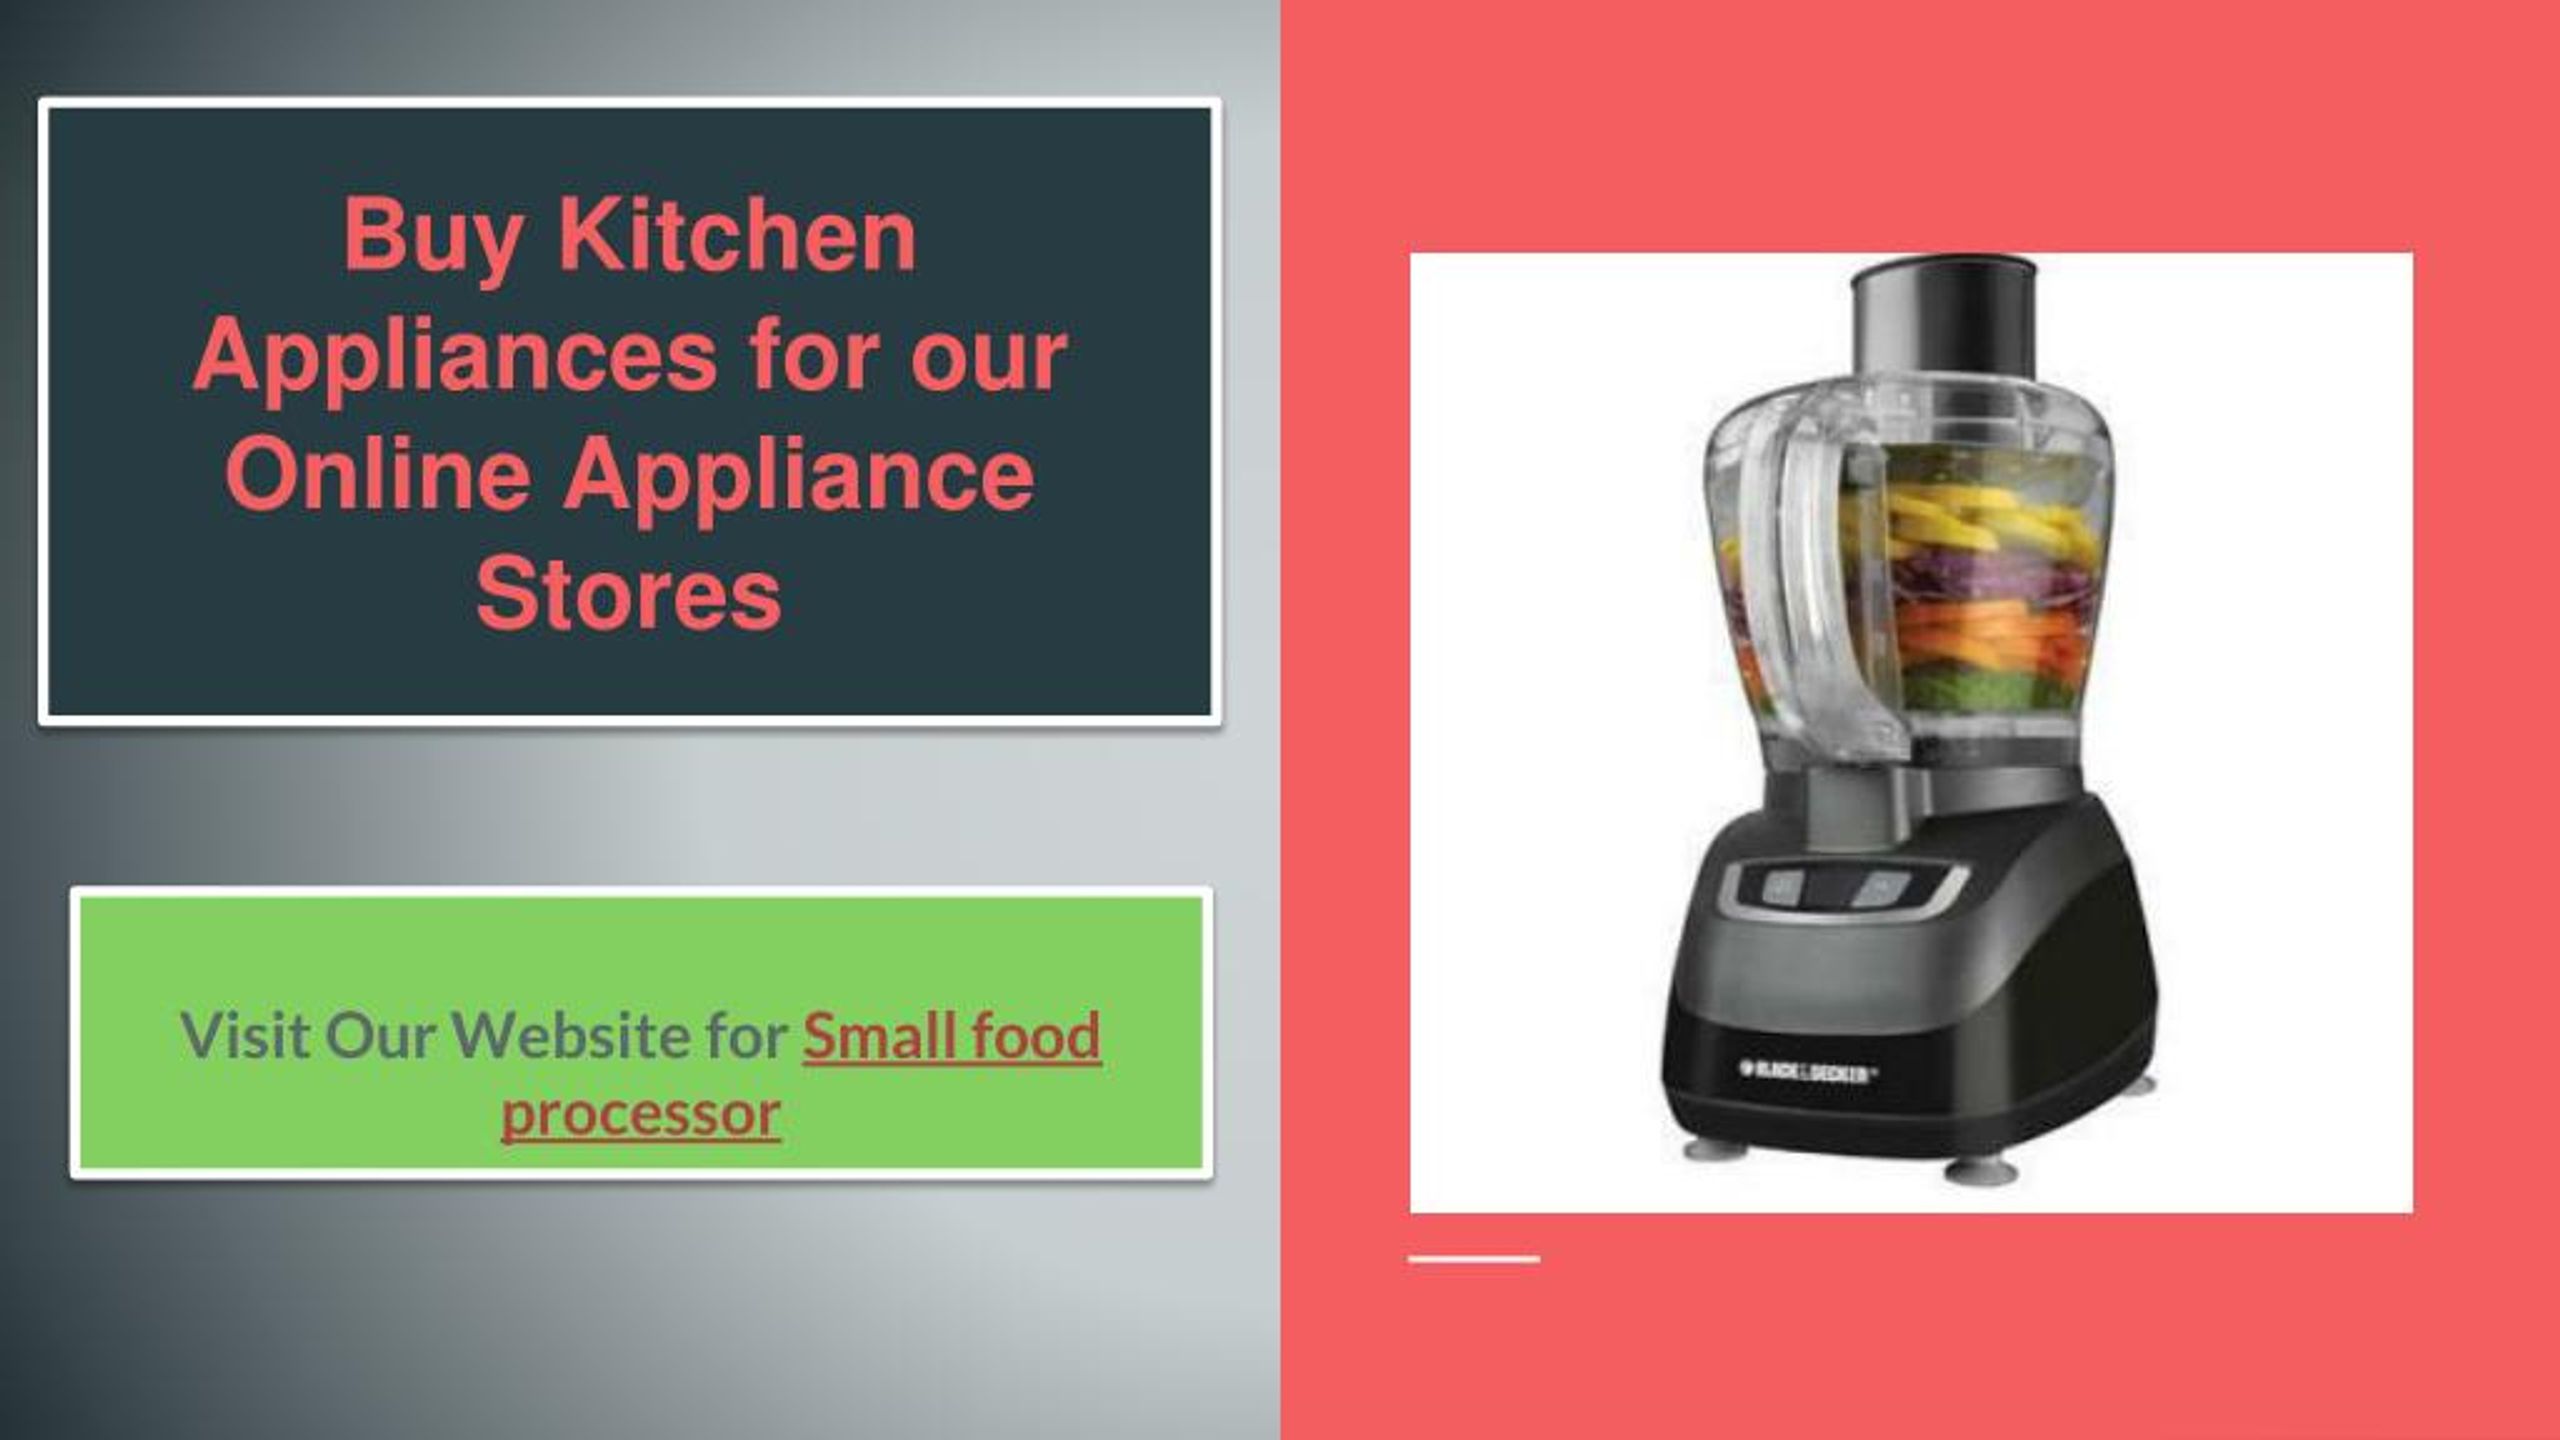 https://image4.slideserve.com/7230652/buy-kitchen-appliances-for-our-online-appliance-stores-l.jpg